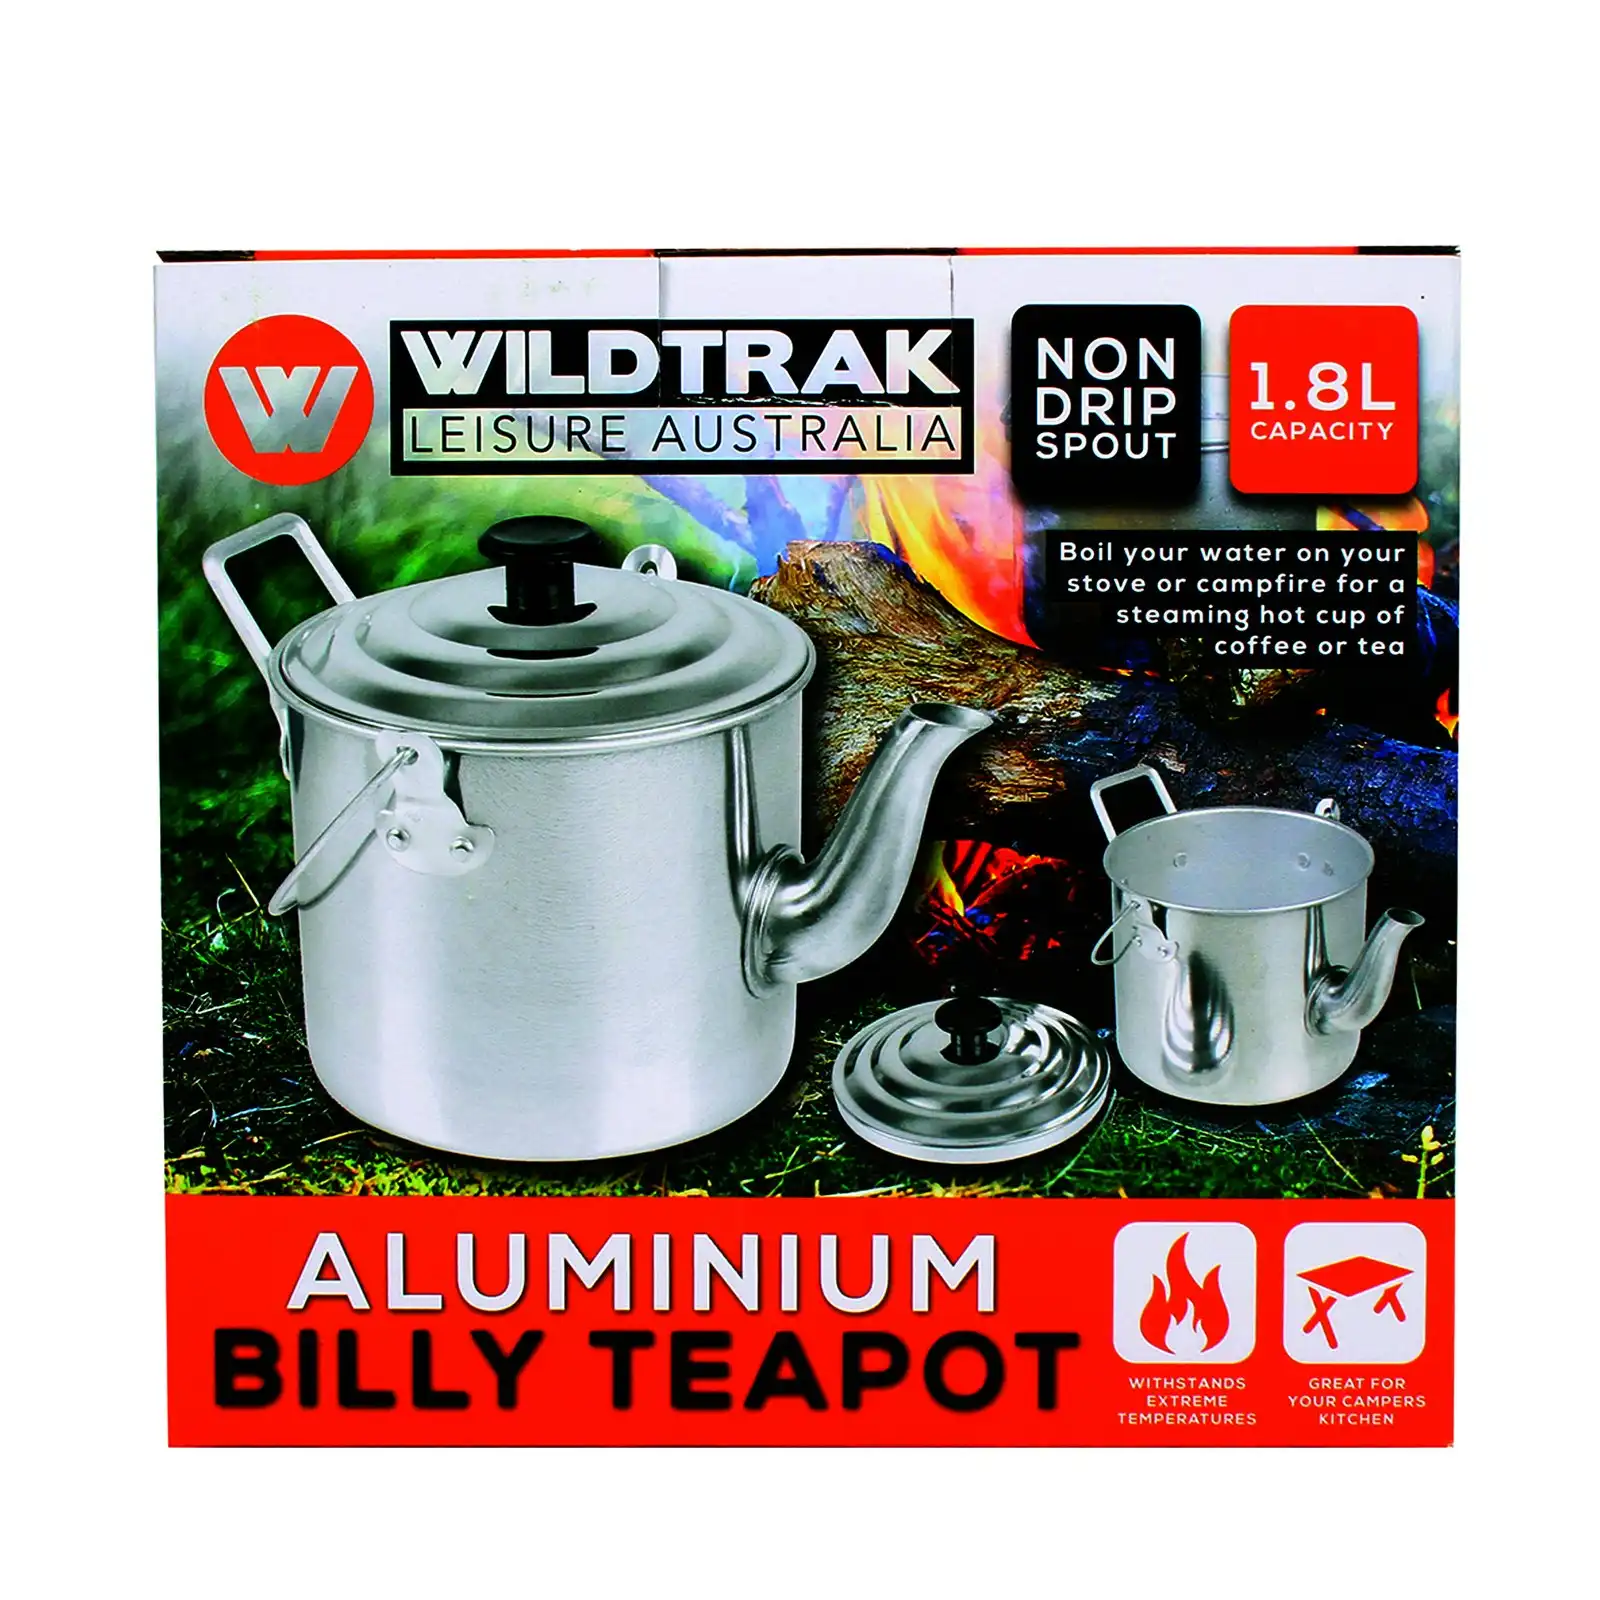 Wildtrak 1800ml Aluminium Billy Teapot Camping Water Boiler Container Silver